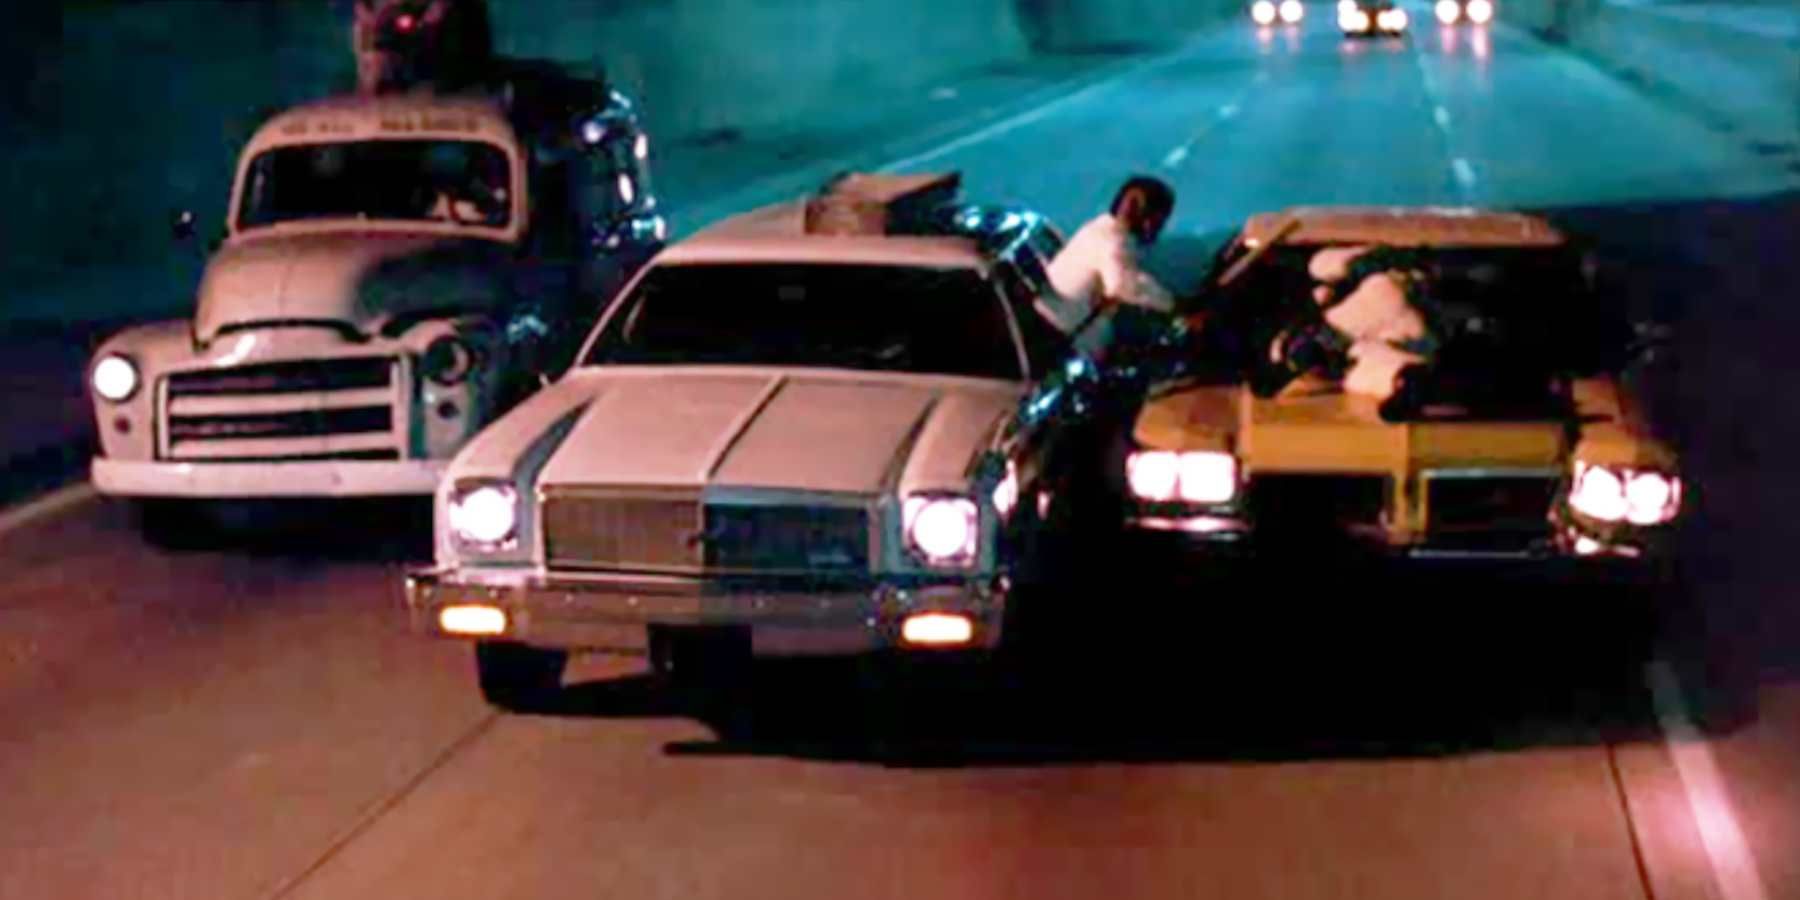 The Delta 88 in the car chase scene from Sam Raimi's Crimewave